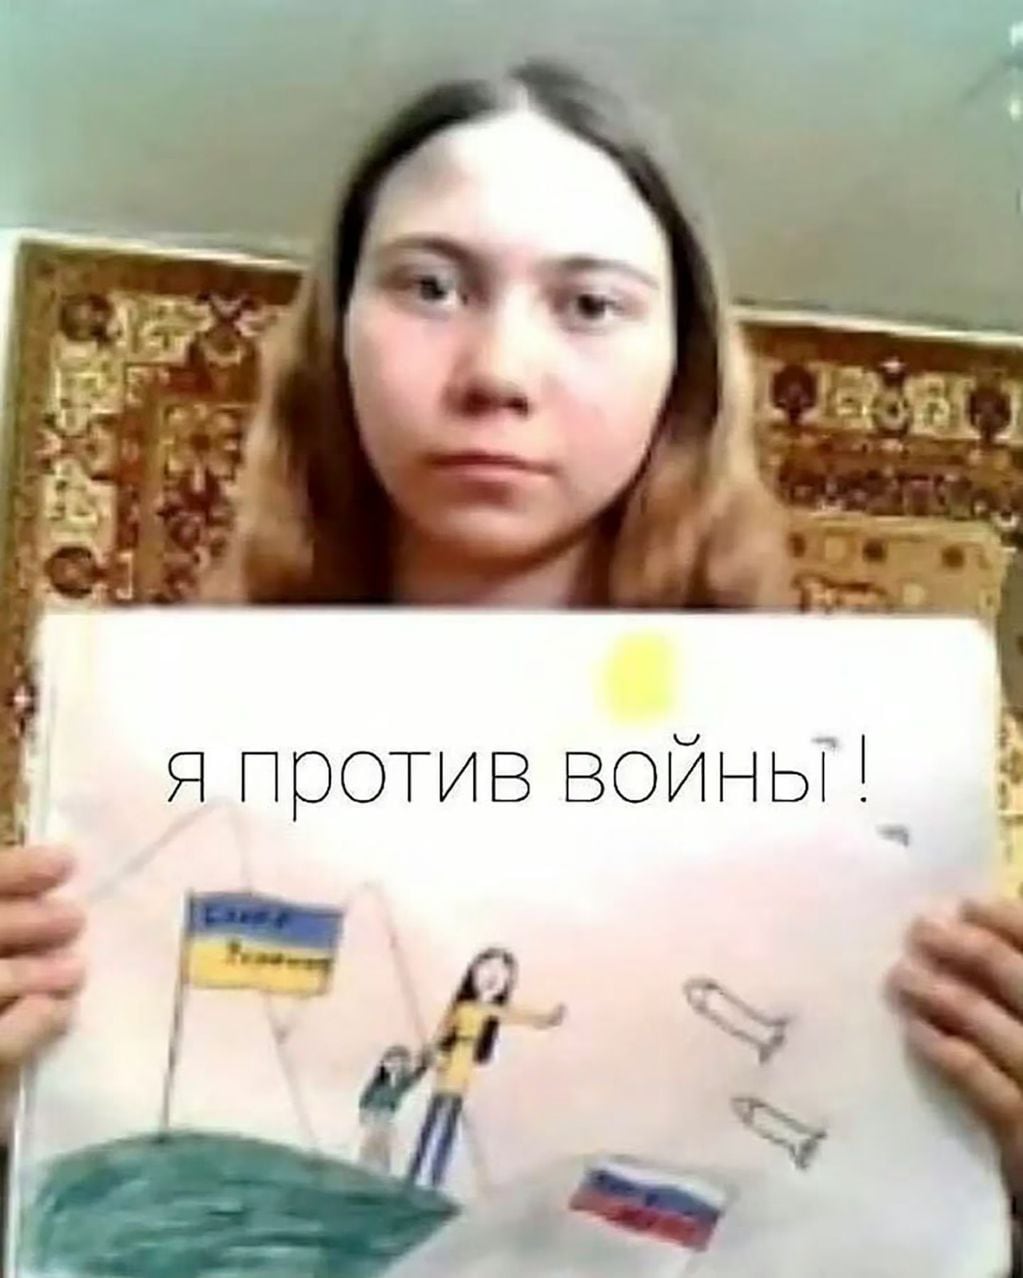 Rusia condenaron al padre de una nena que hizo un dibujo a favor de la paz en Ucrania. Foto: web